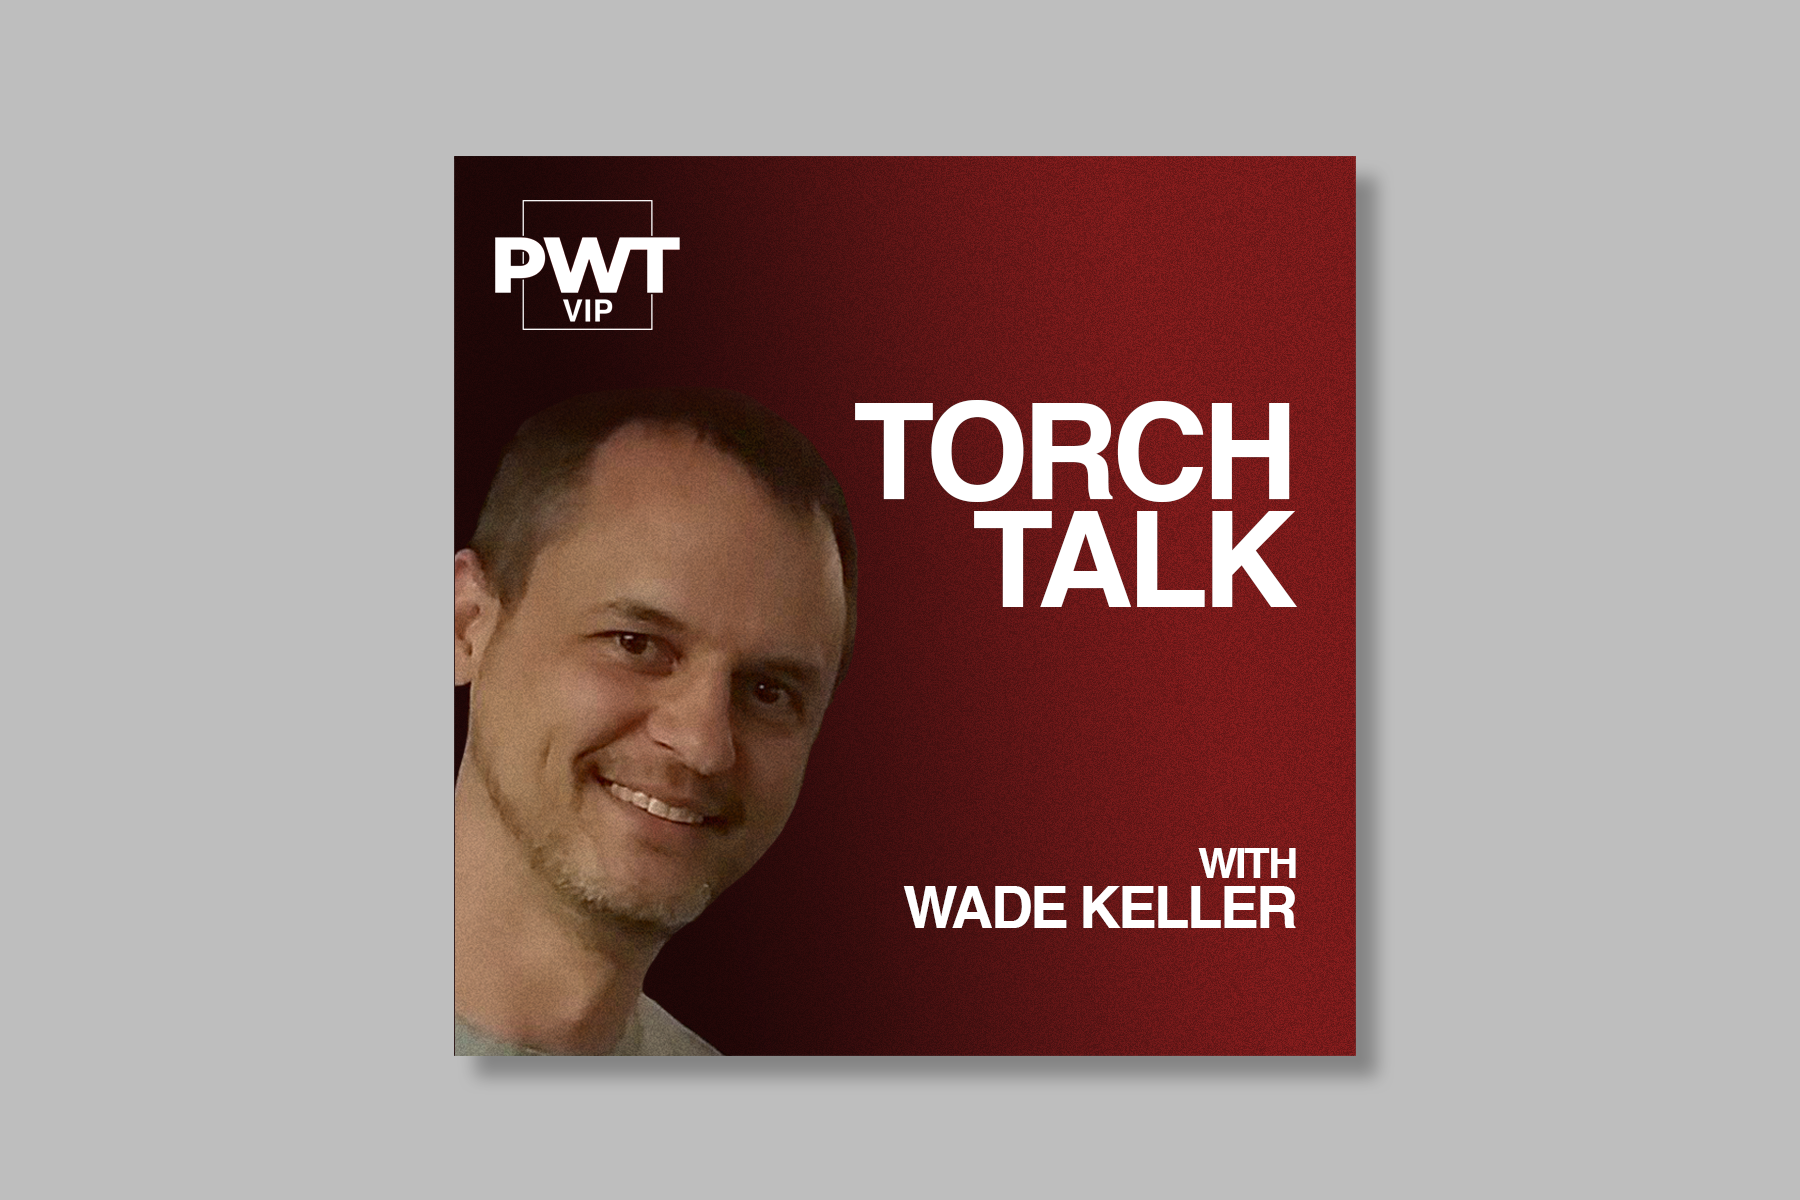 Vip Audio 8 17 – Torch Talk With Brian Gewirtz Former Head Wwe Writer